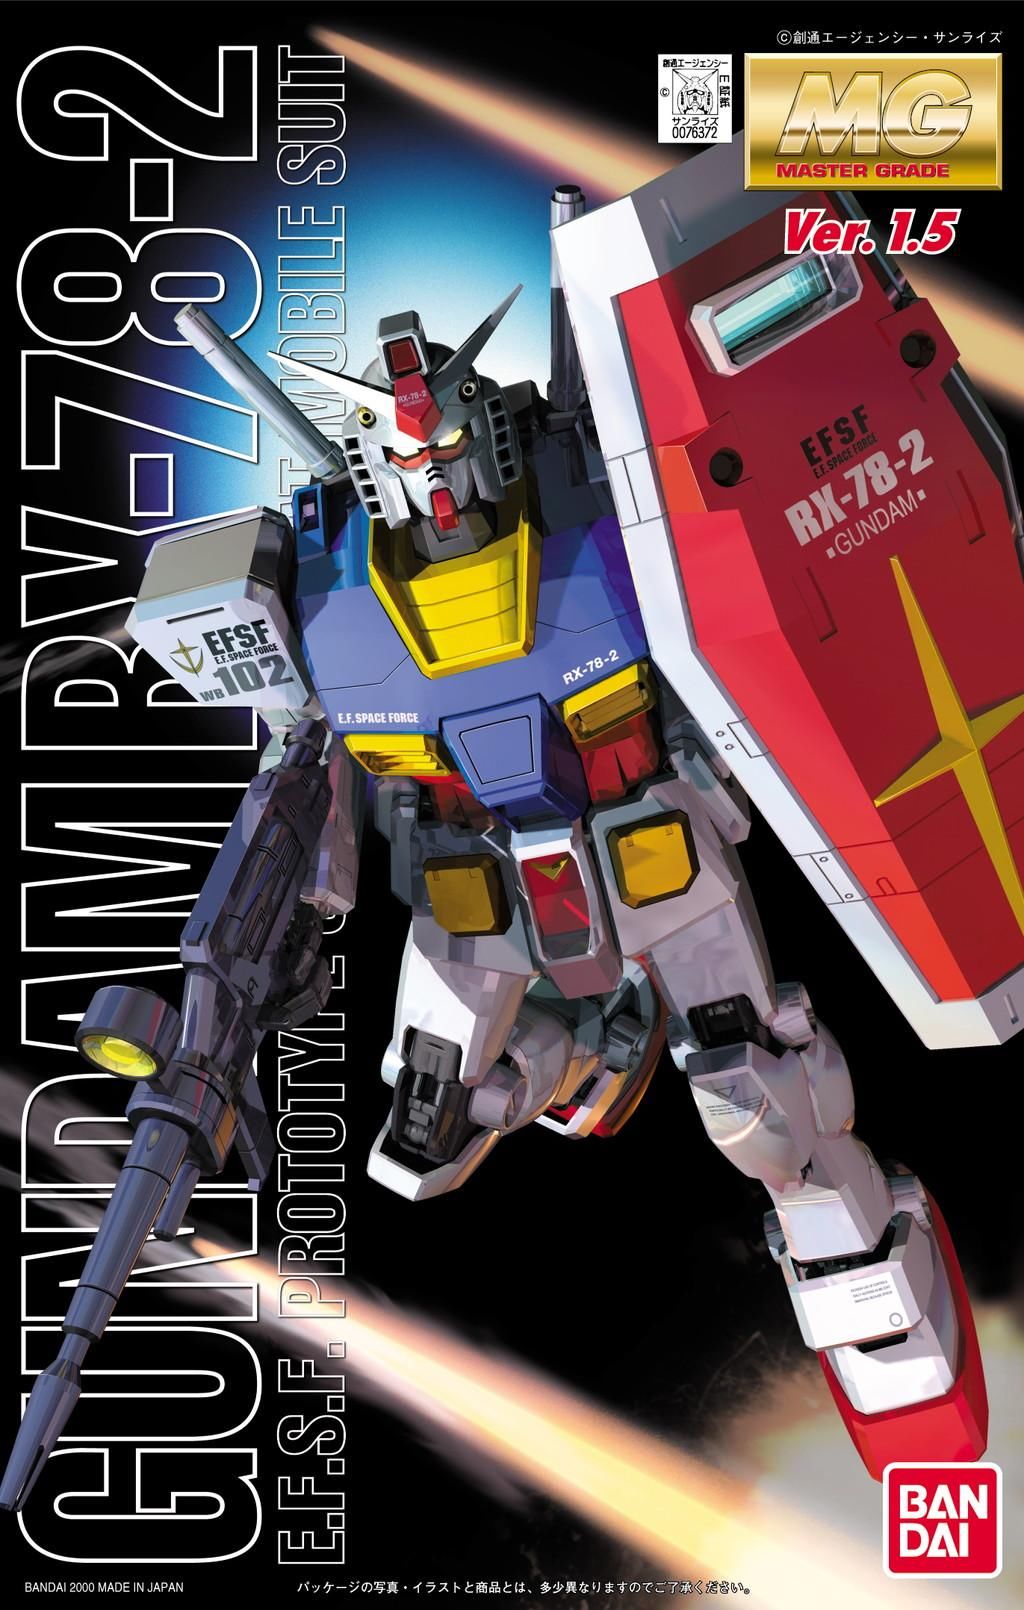 Bandai 1/100 Scale MG RX-78-2 Gundam Ver 1.5 Model Kit